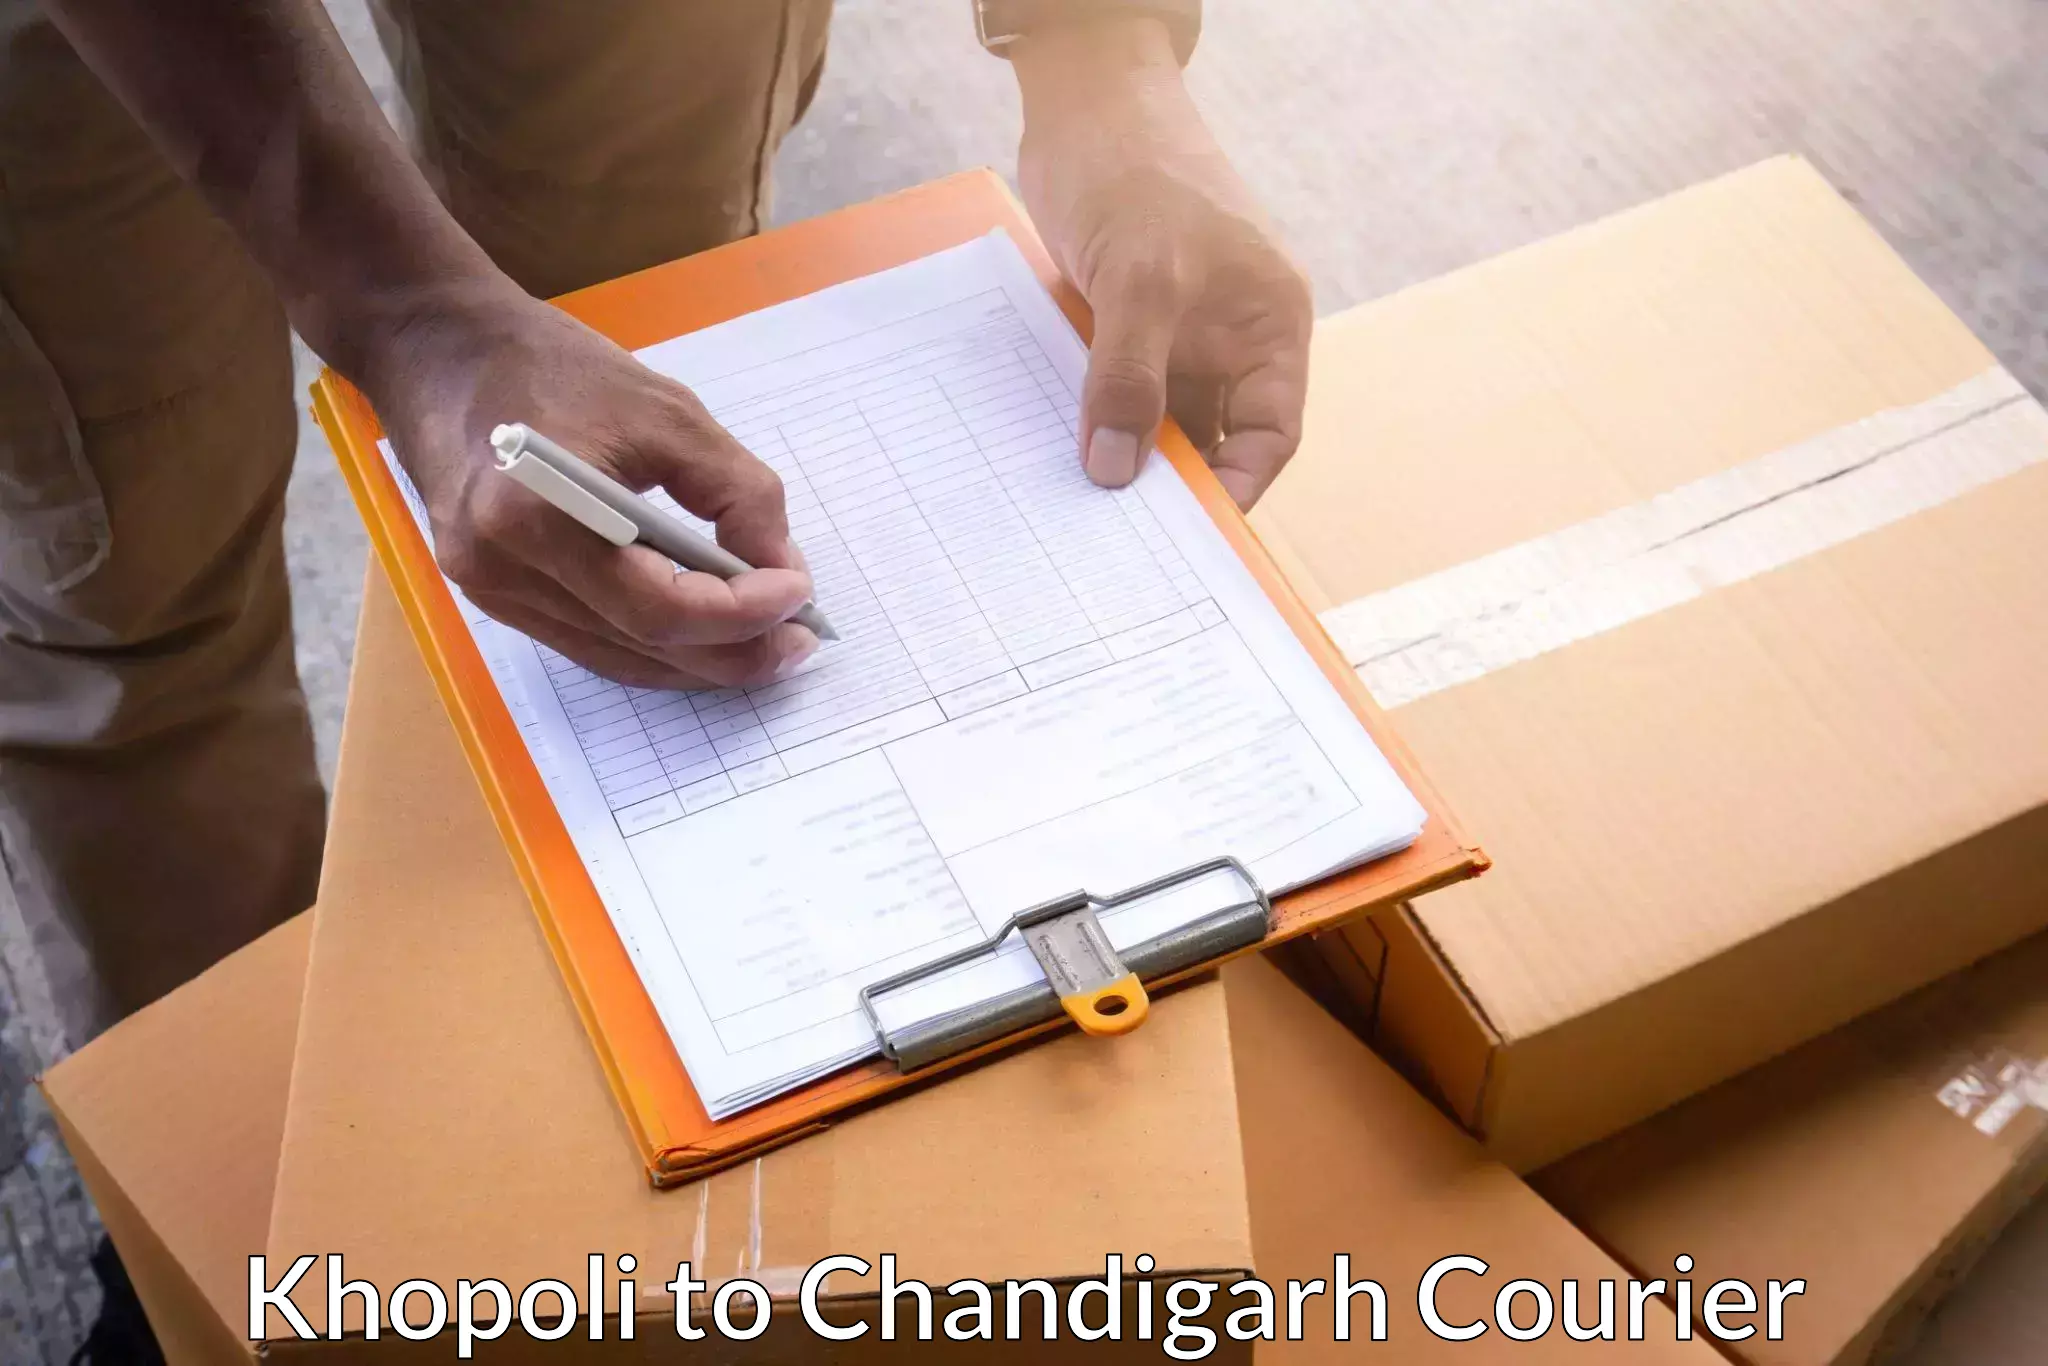 Express postal services Khopoli to Chandigarh